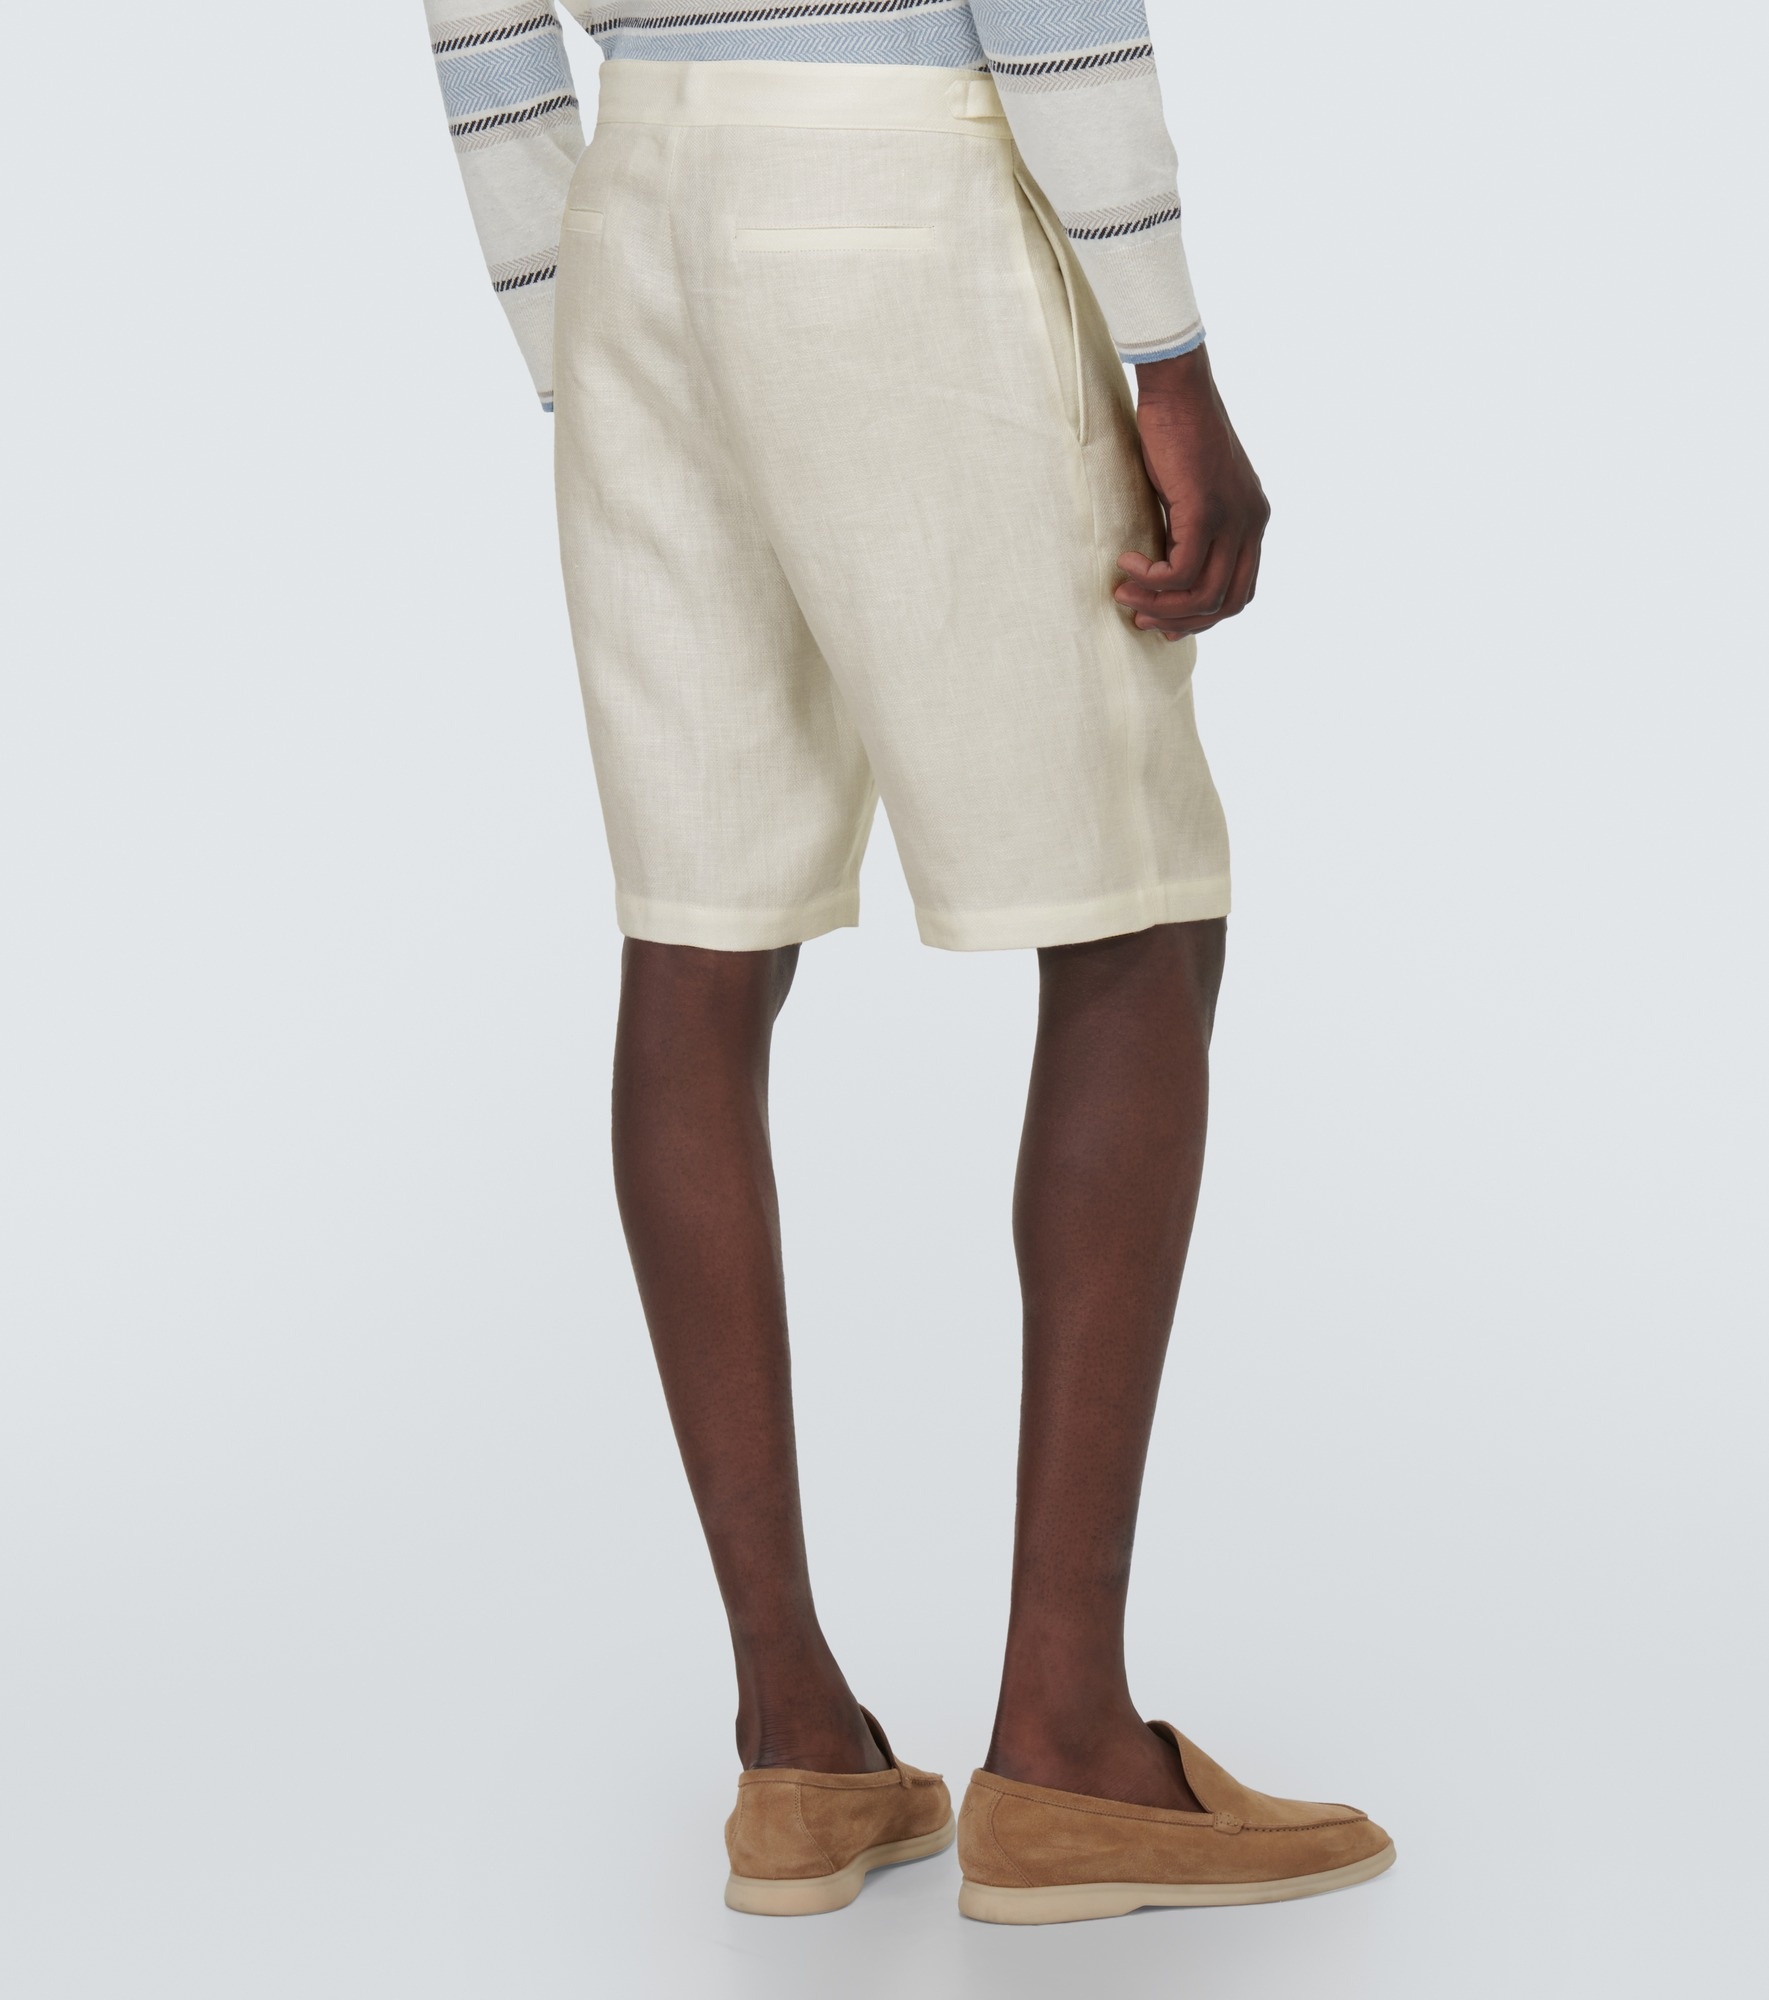 Majuro linen Bermuda shorts - 4